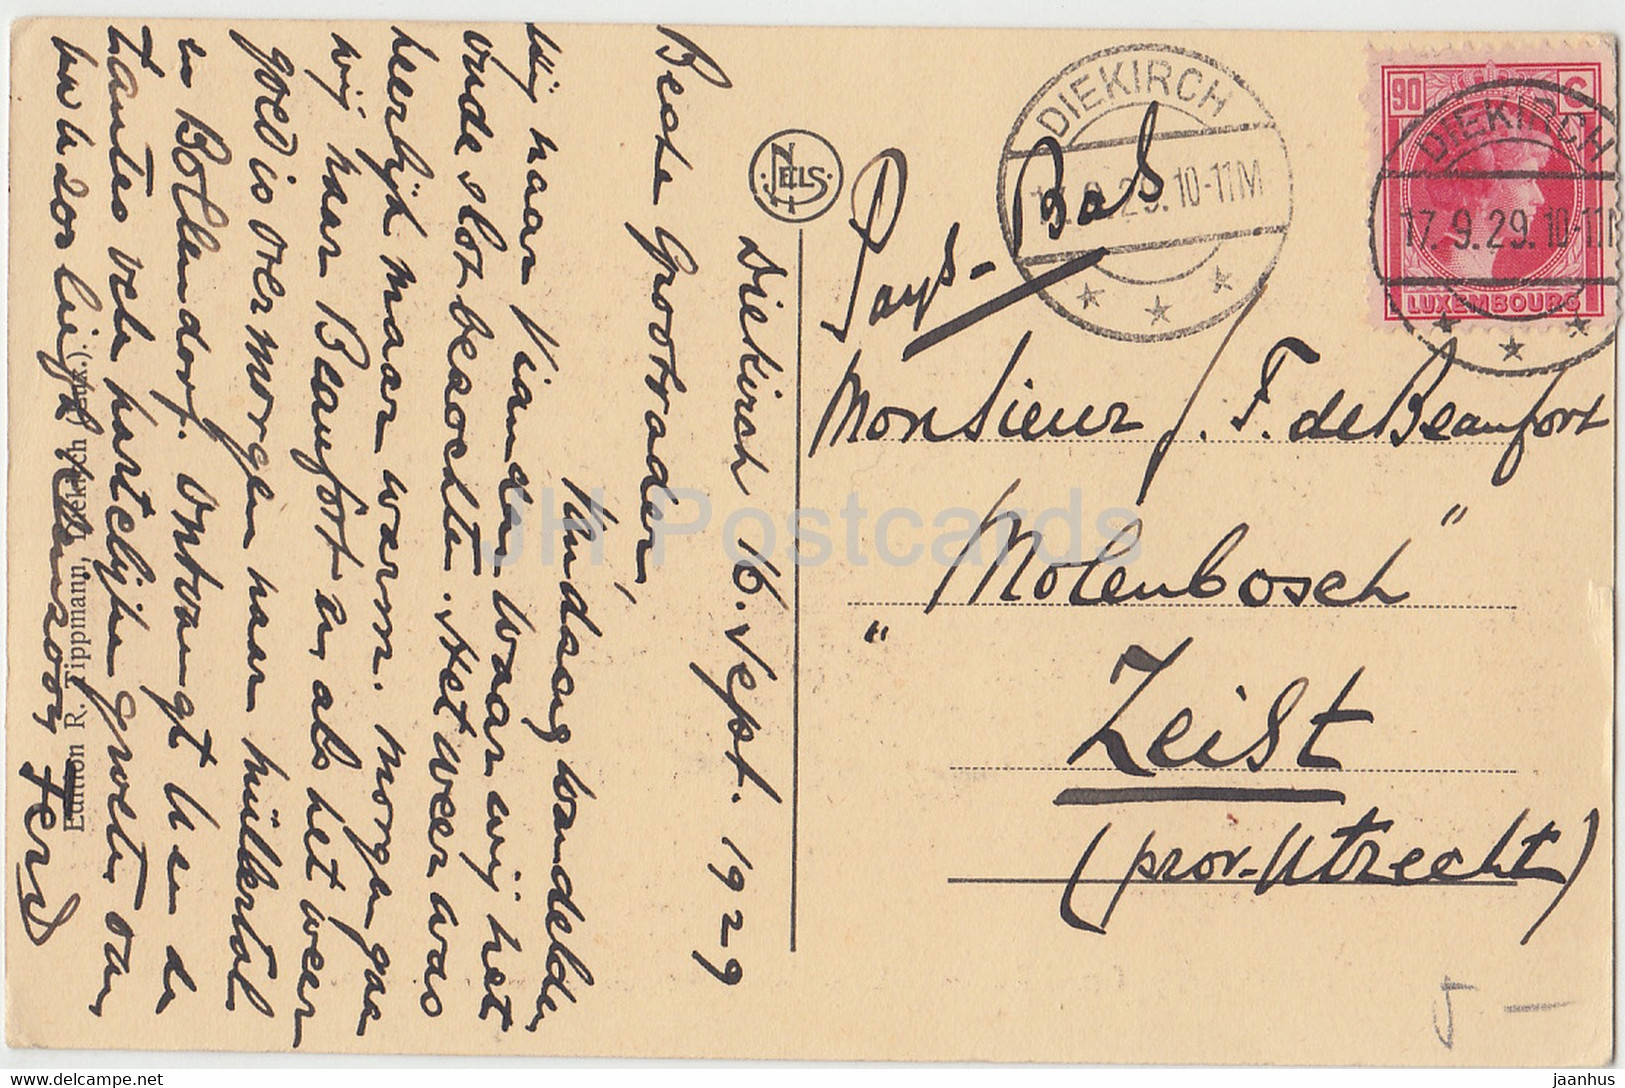 Grand Duche De Luxembourg - Chateau Granducal De Colmar Berg - Castle - Old Postcard - 1929 - Luxembourg - Used - Burscheid